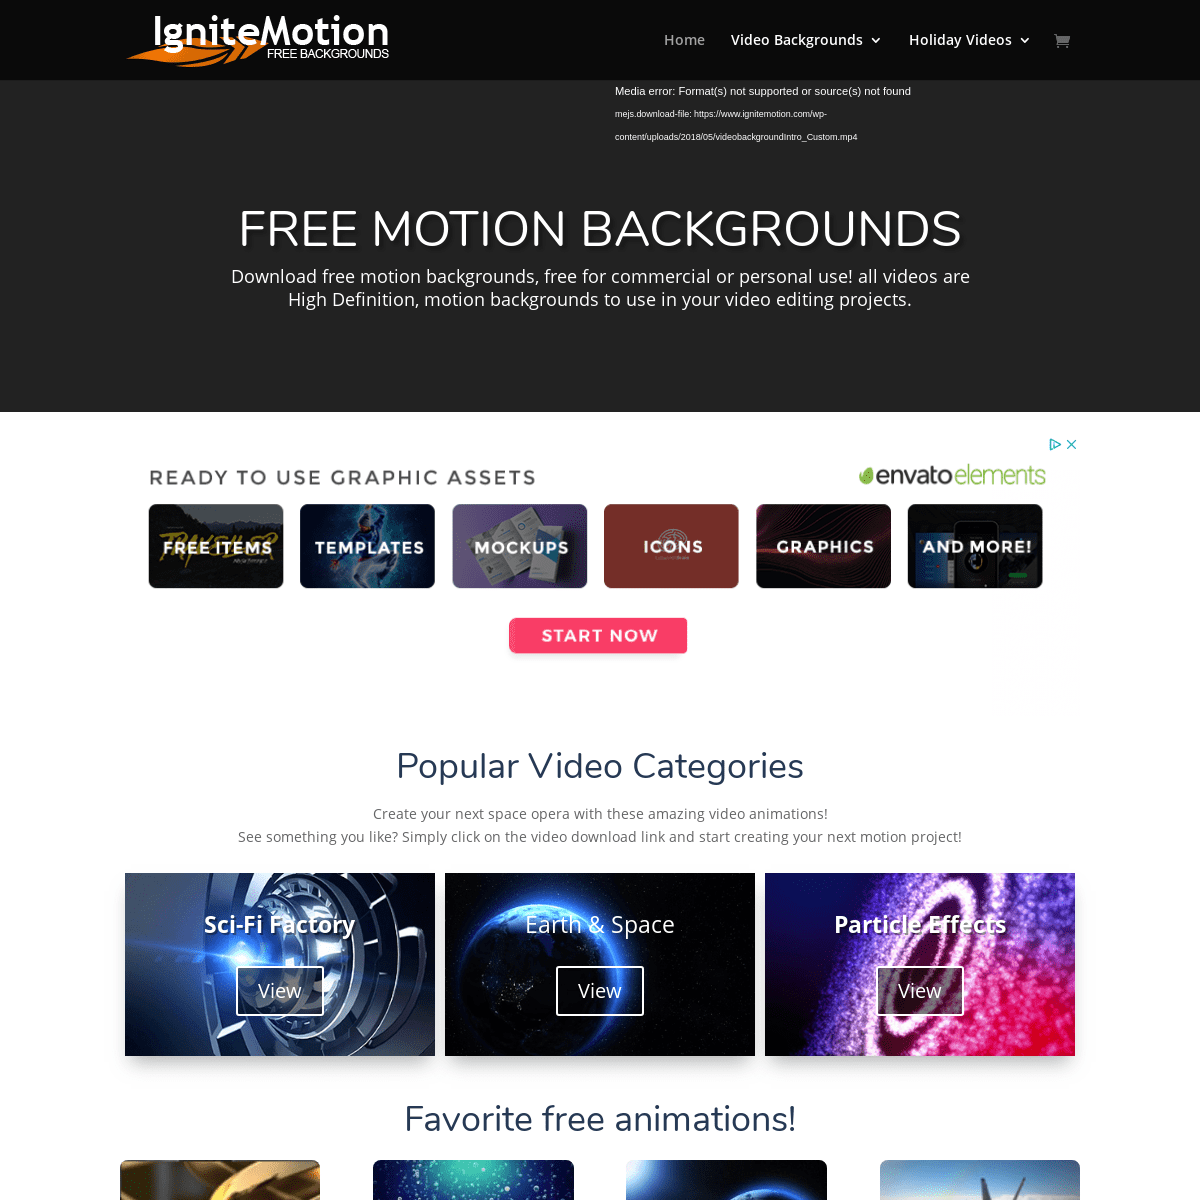 A complete backup of ignitemotion.com